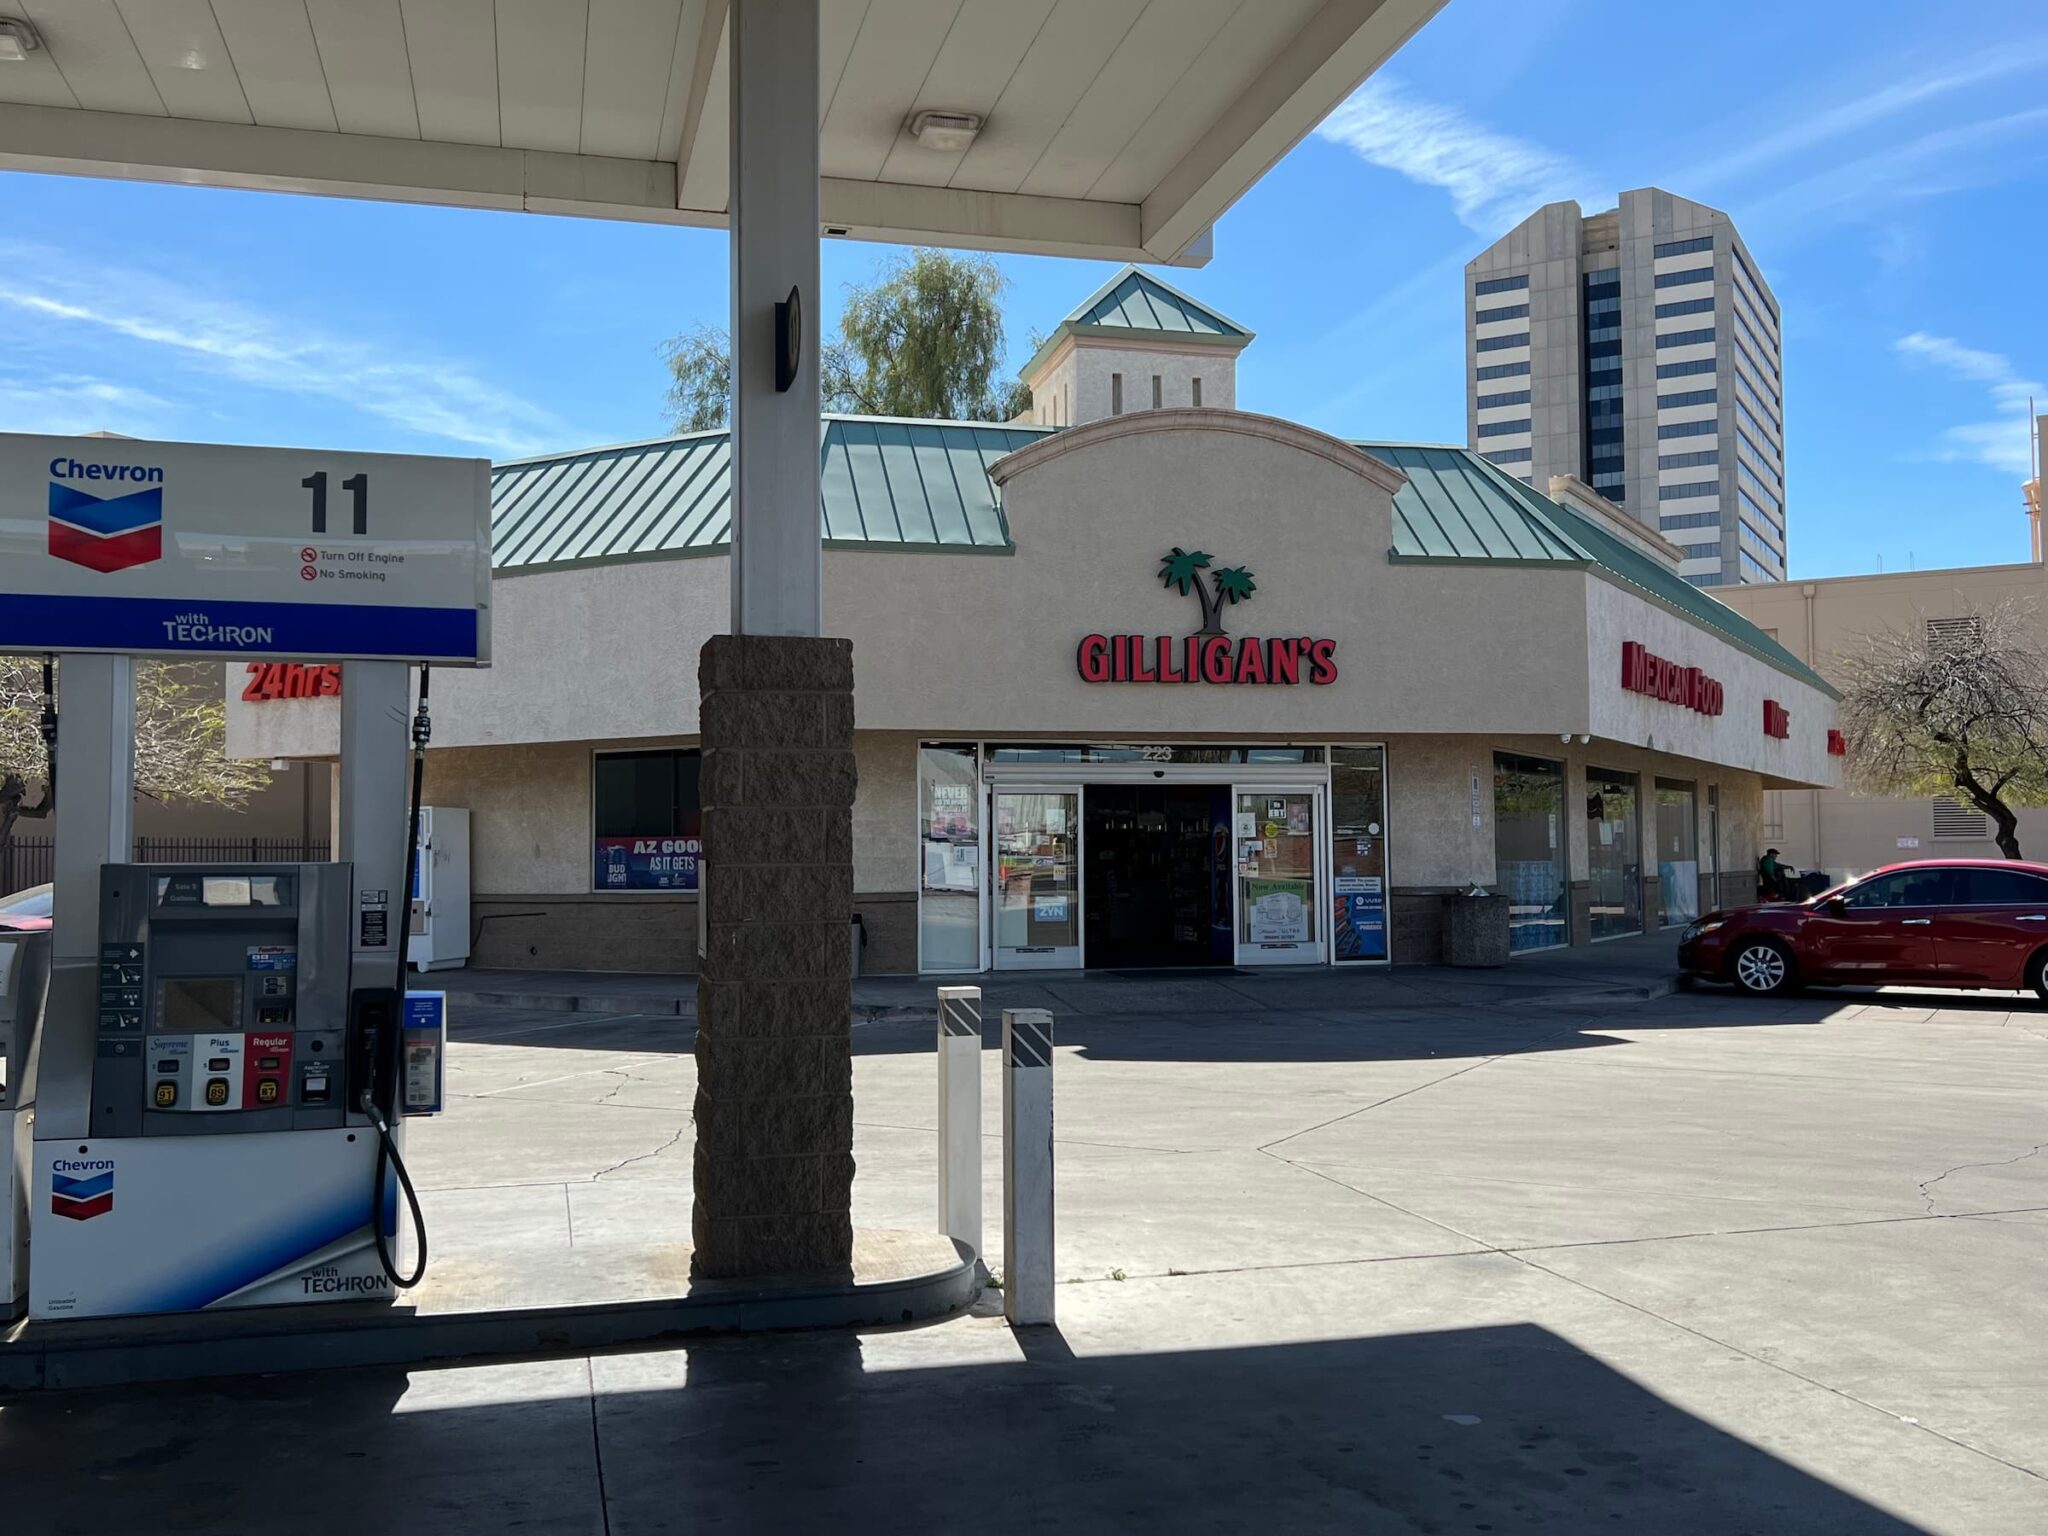 Gilligan's gas station